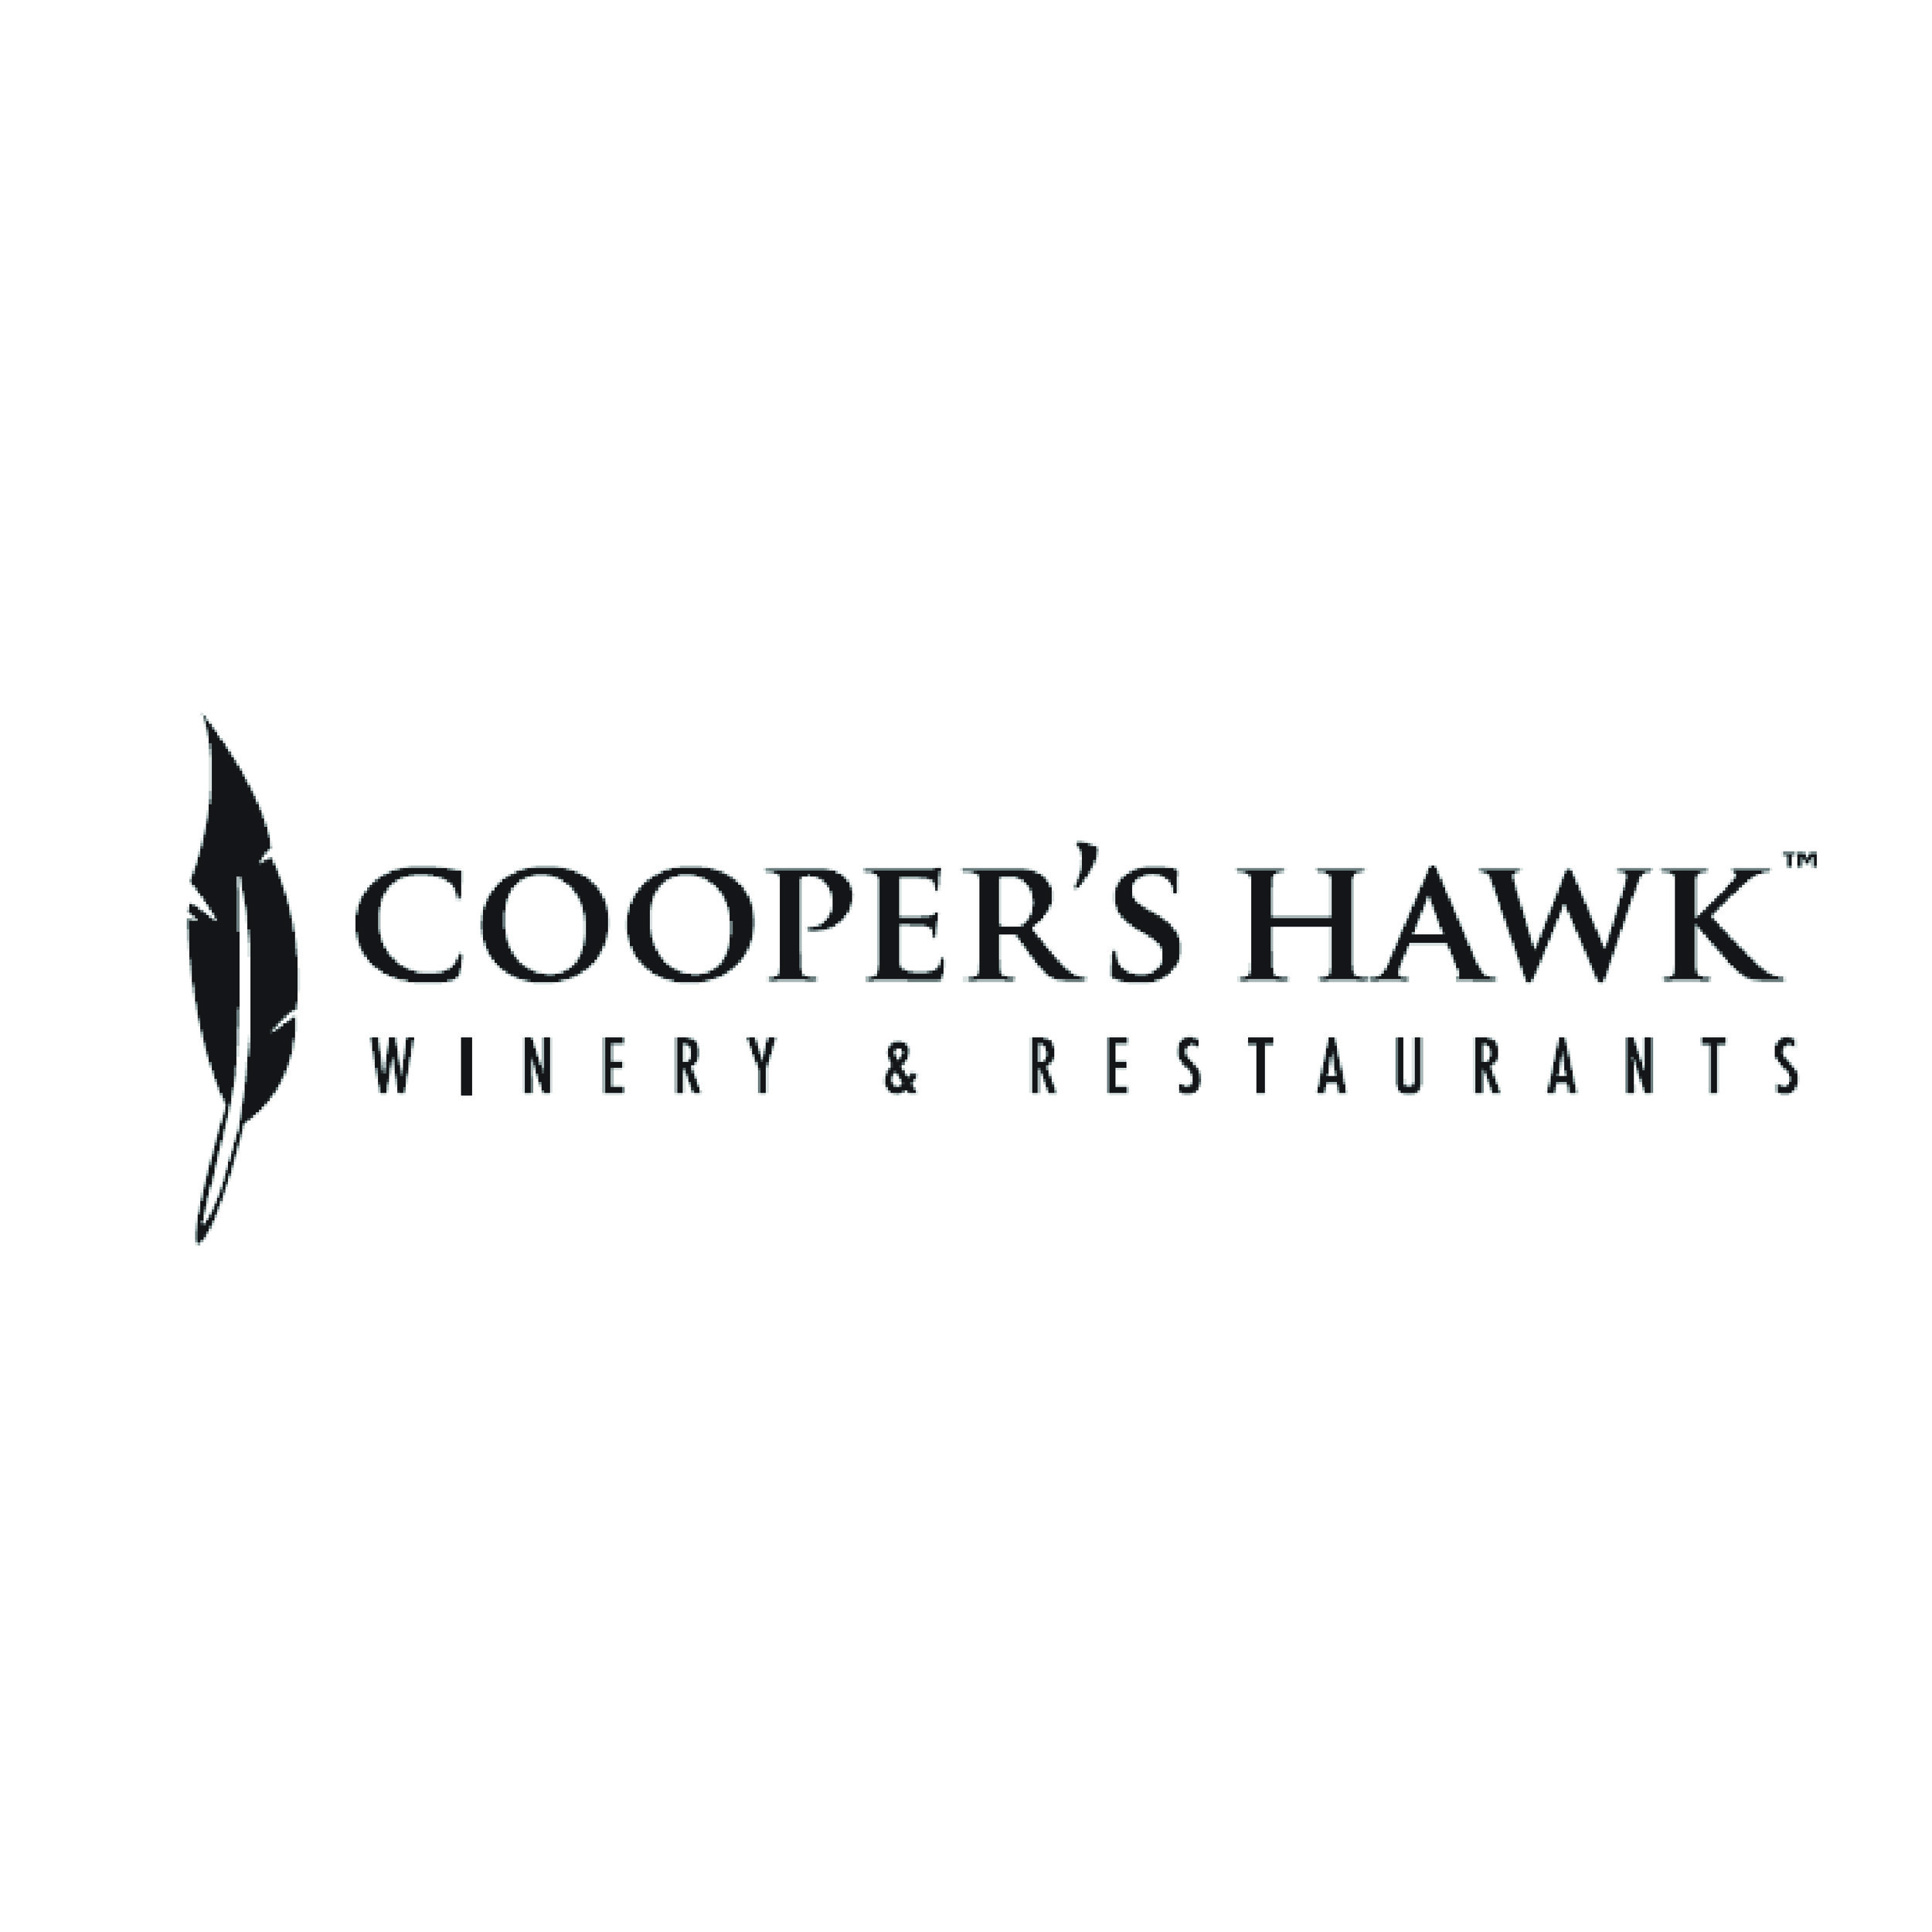 Coopers Hawk-01-01.jpg